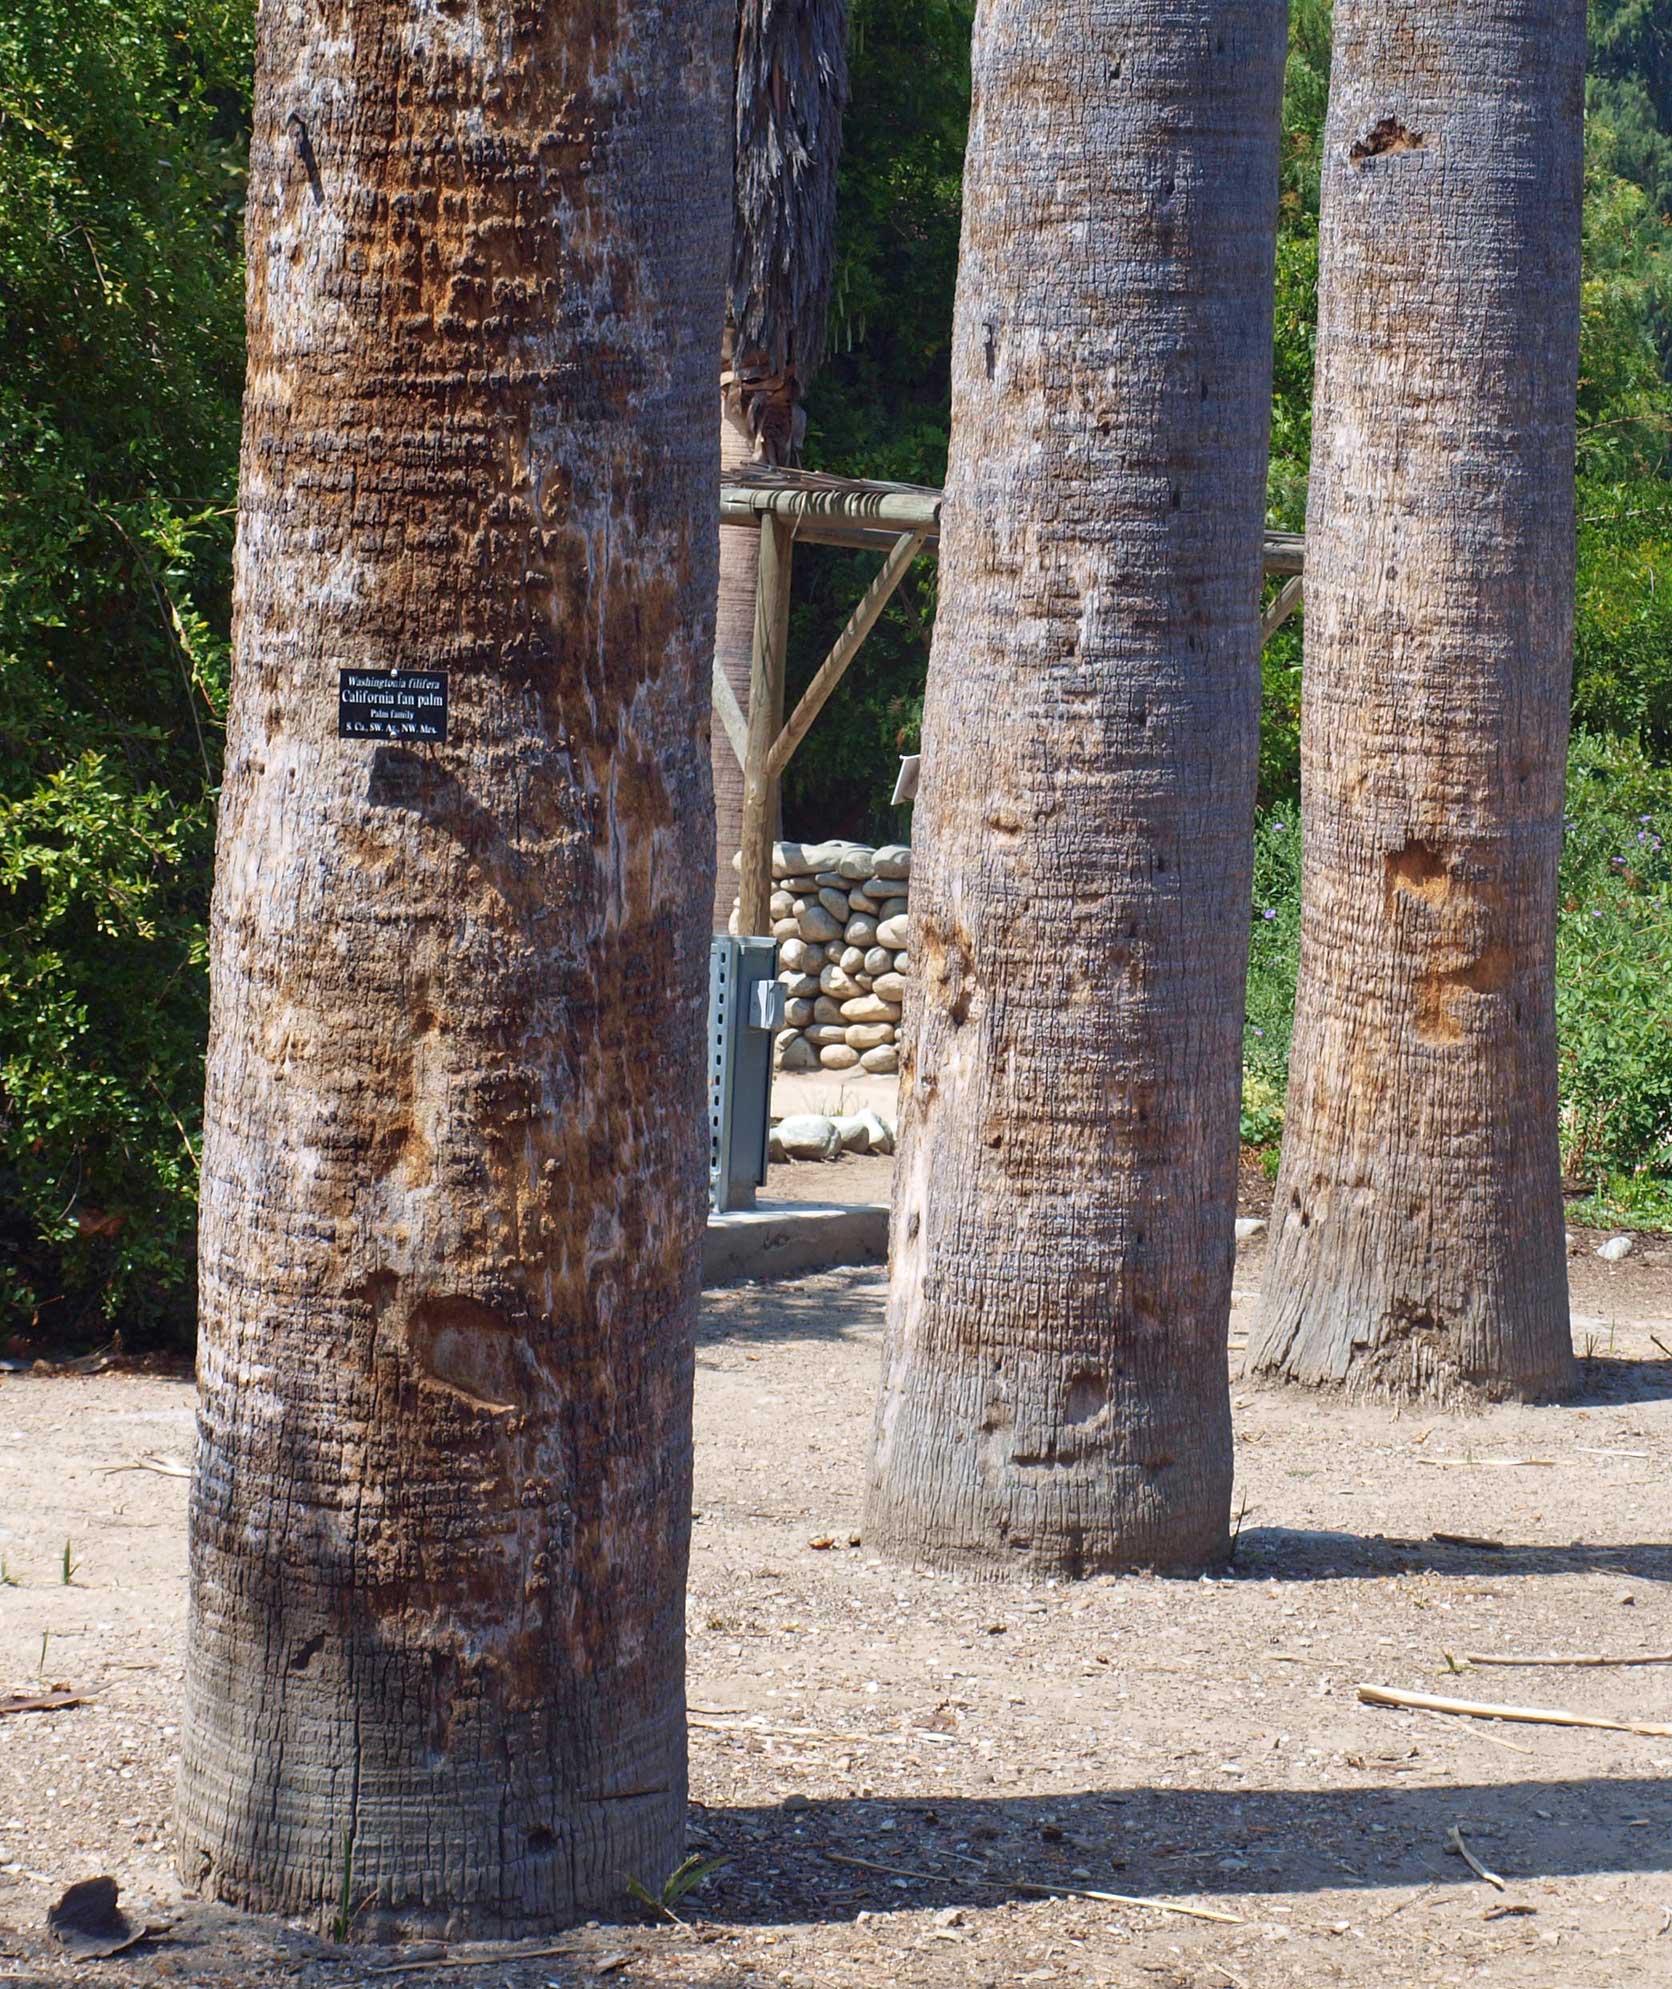   Washingtonia filifera  base of columnar stems 